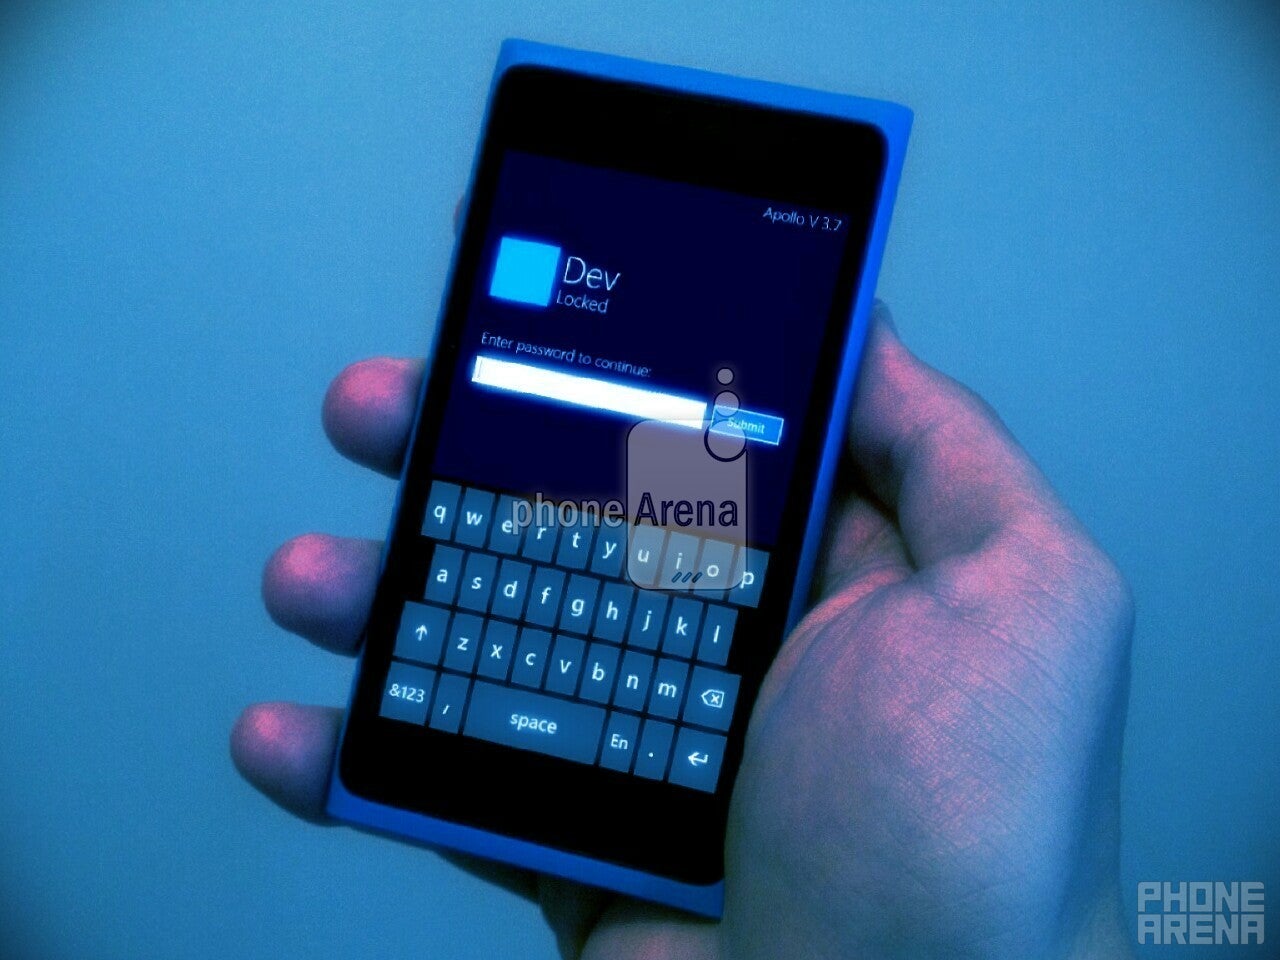 Windows Phone 8 &quot;Apollo&quot; shown tested on a Nokia Lumia 900